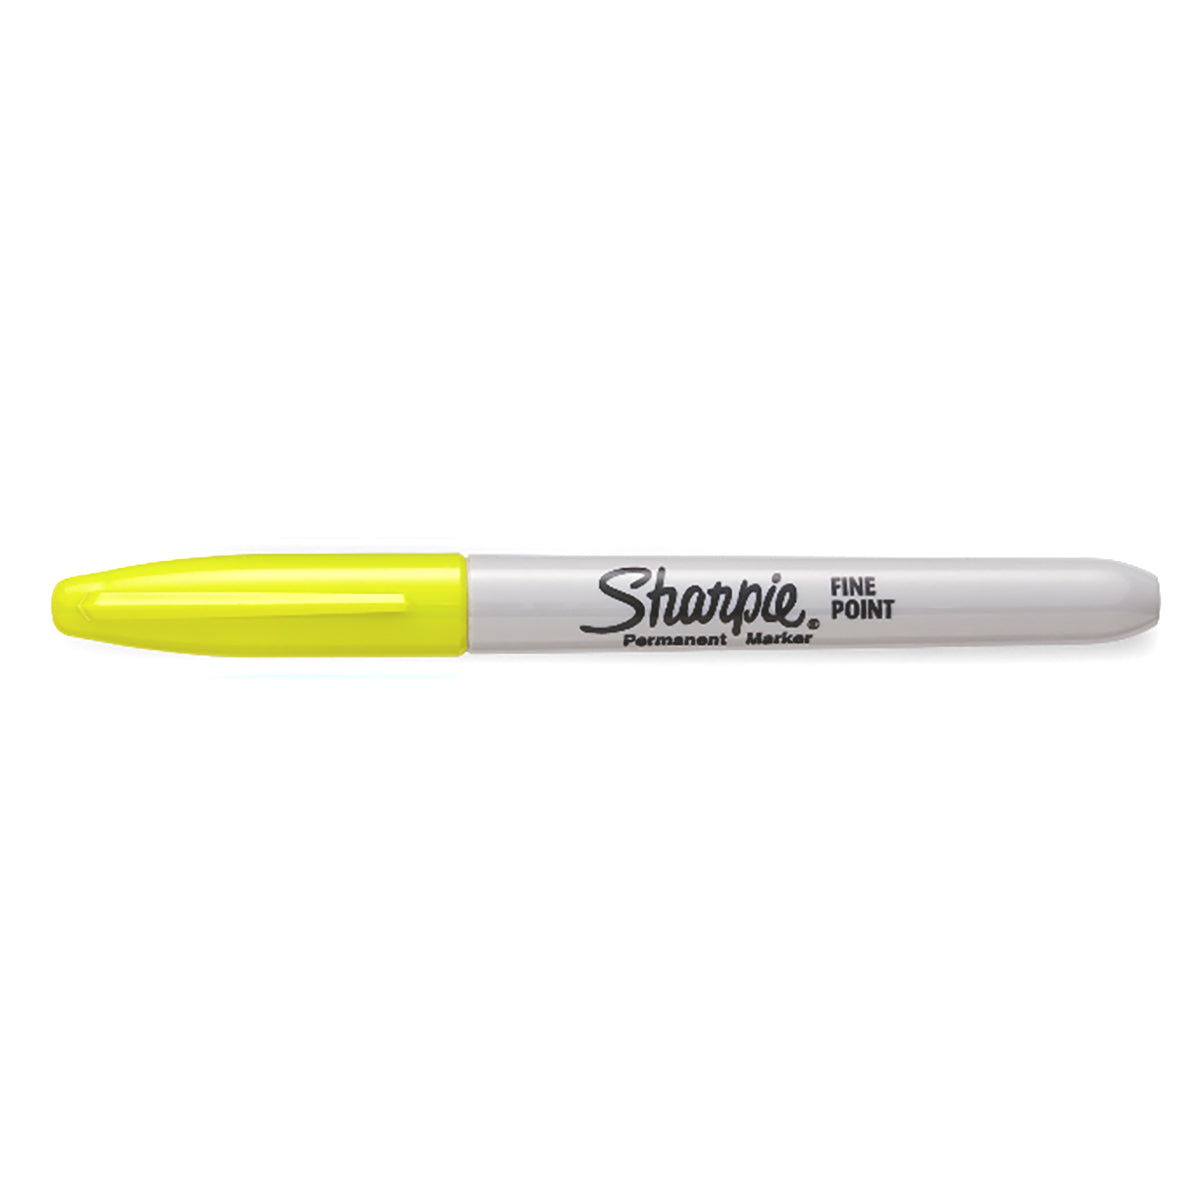 Sharpie Permanent Marker - Ultra Fine Point - Slate Grey